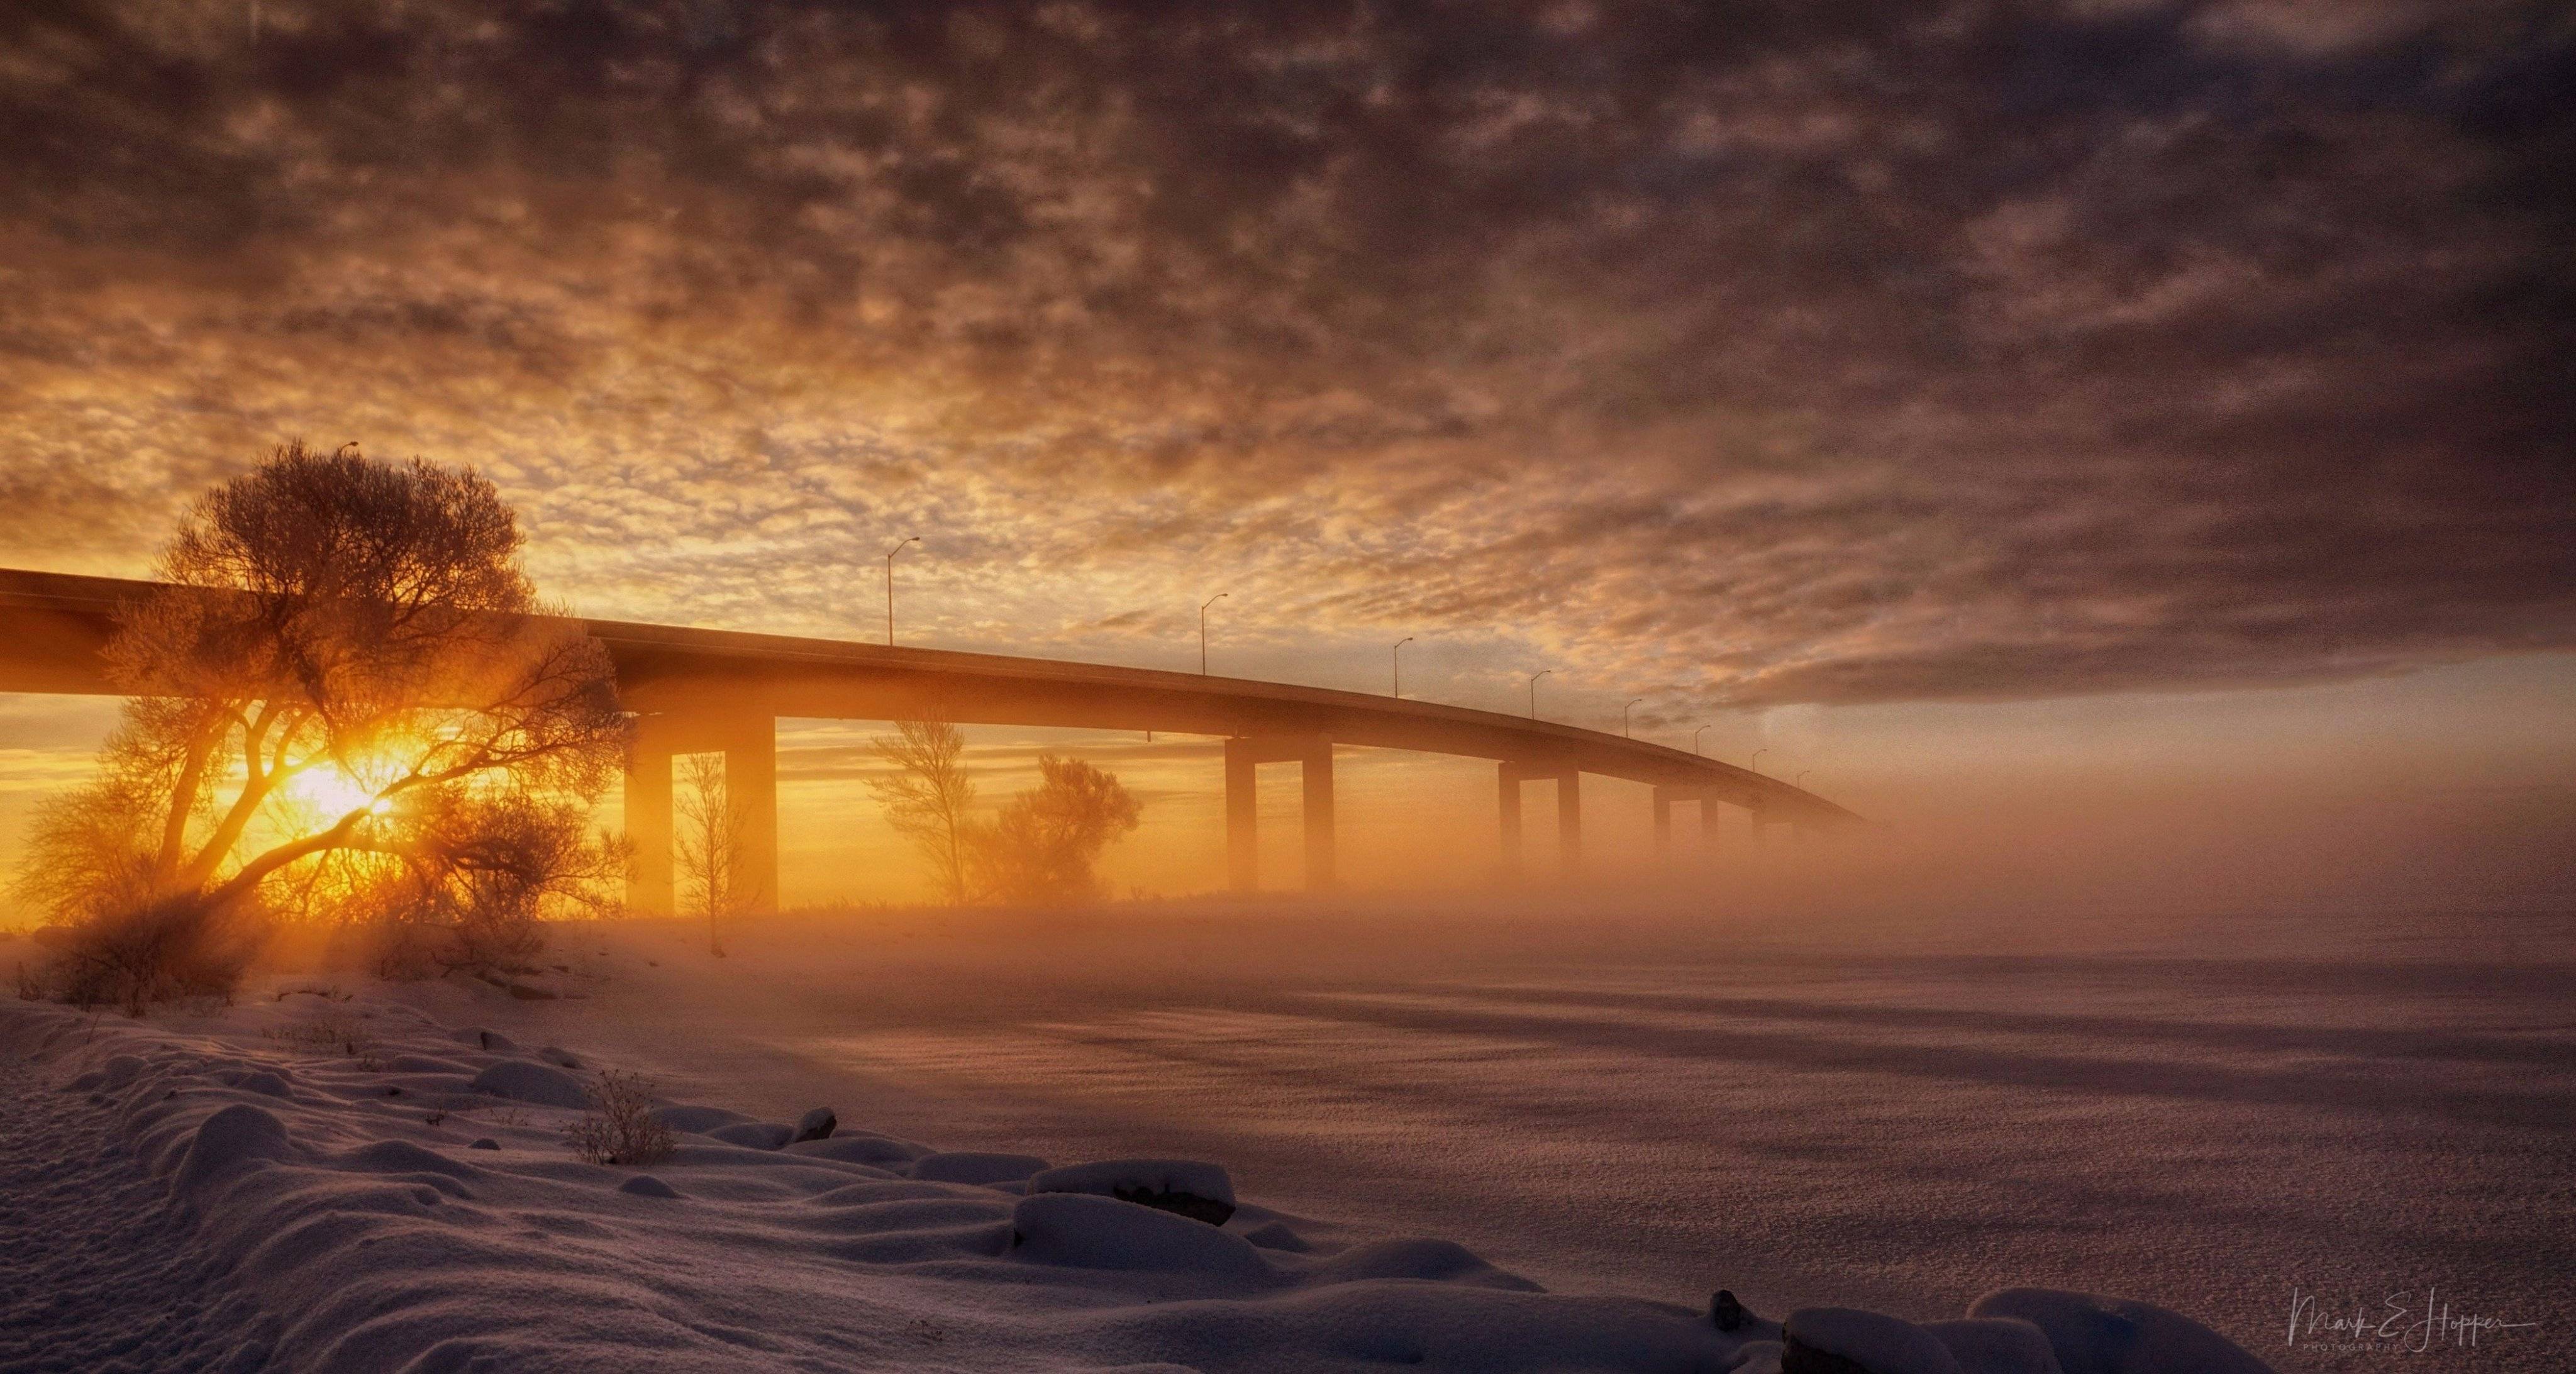 1st Place Winter happens...cross that bridge when we get to it, Ontario by Mark Hopper @hoppermark